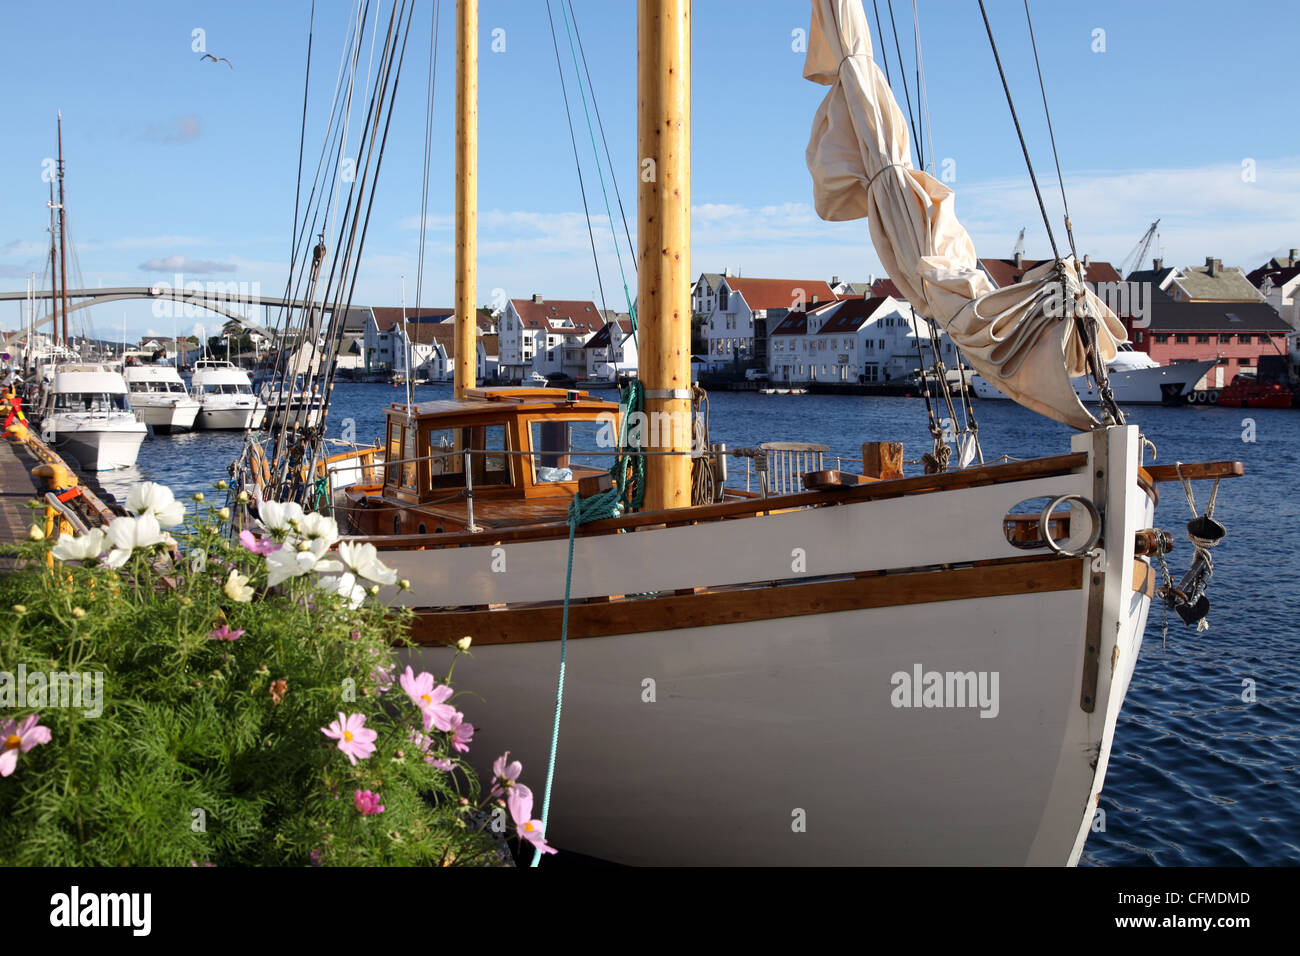 Traditional wooden boat, Colin Archer type, Haugesund, Norway, Scandinavia, Europe Stock Photo